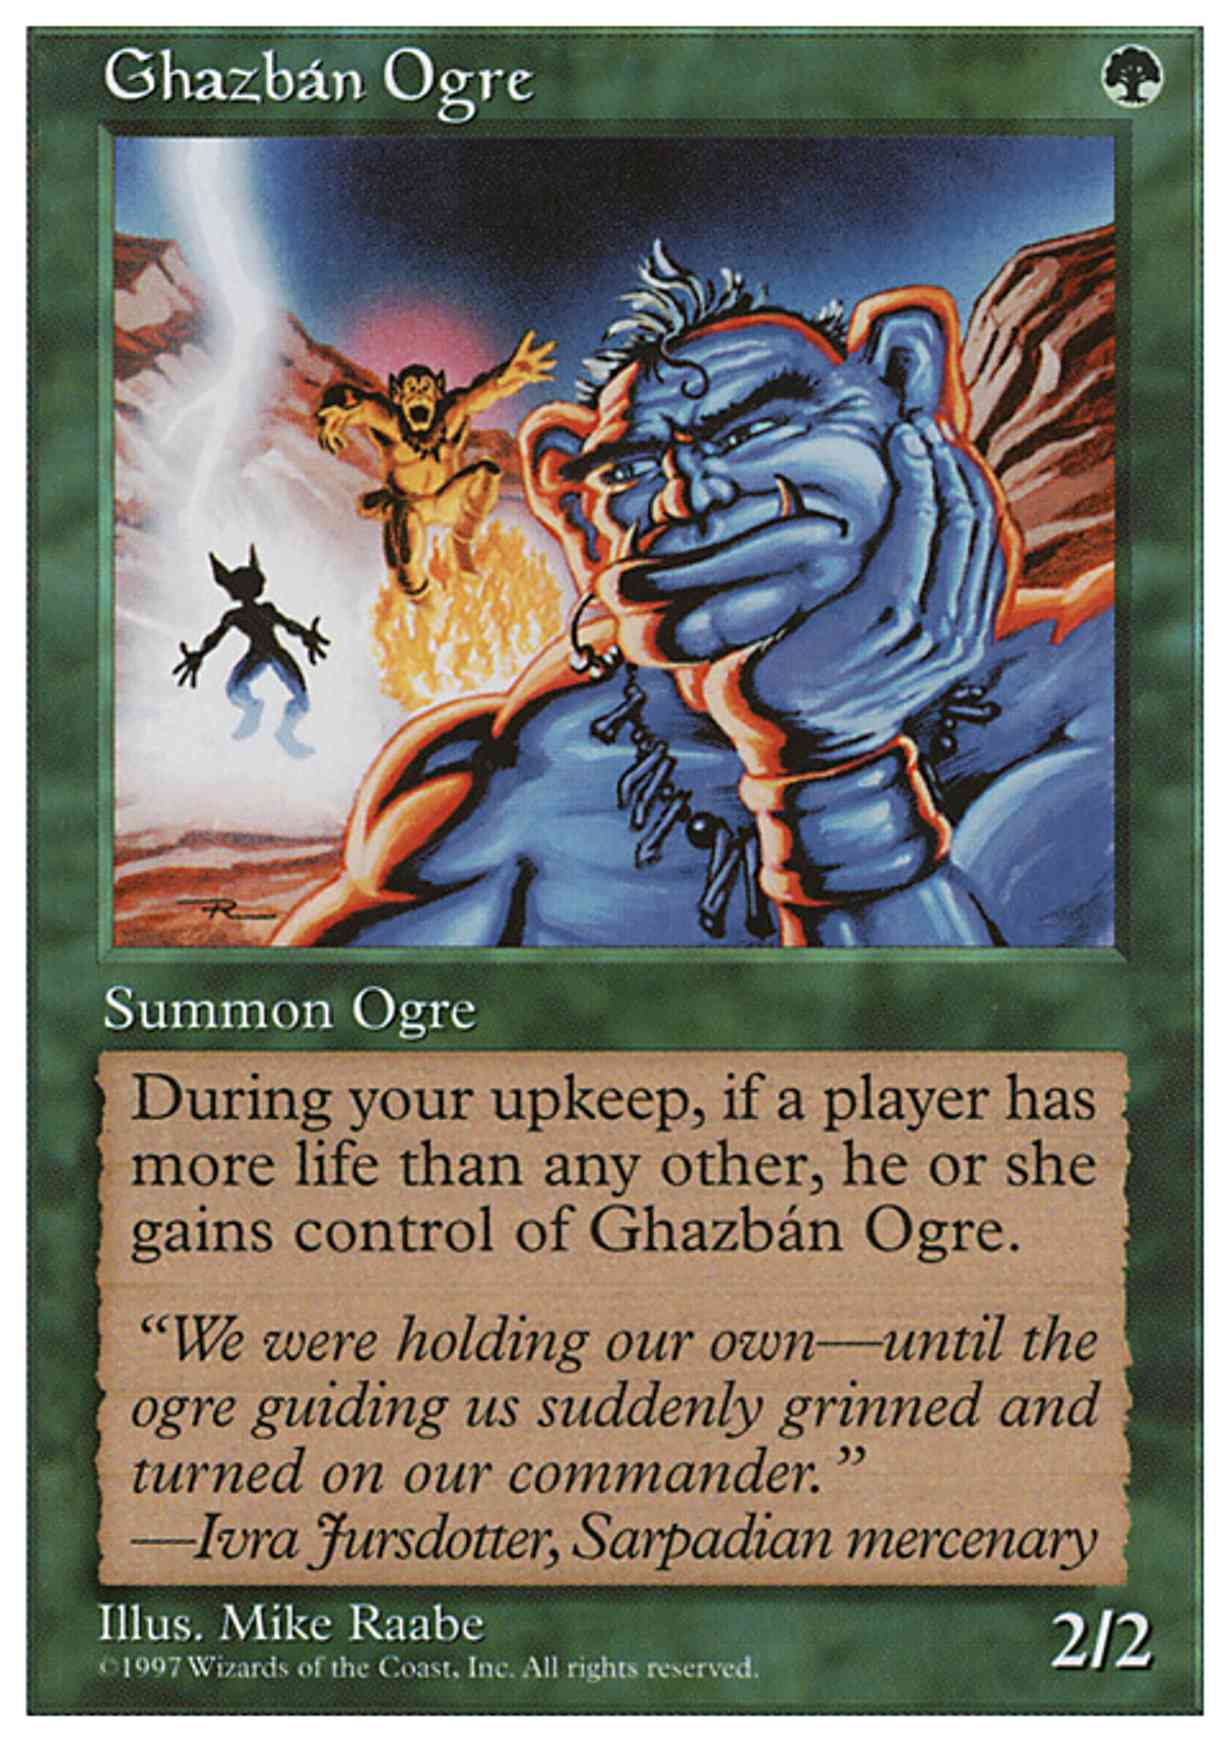 Ghazban Ogre magic card front